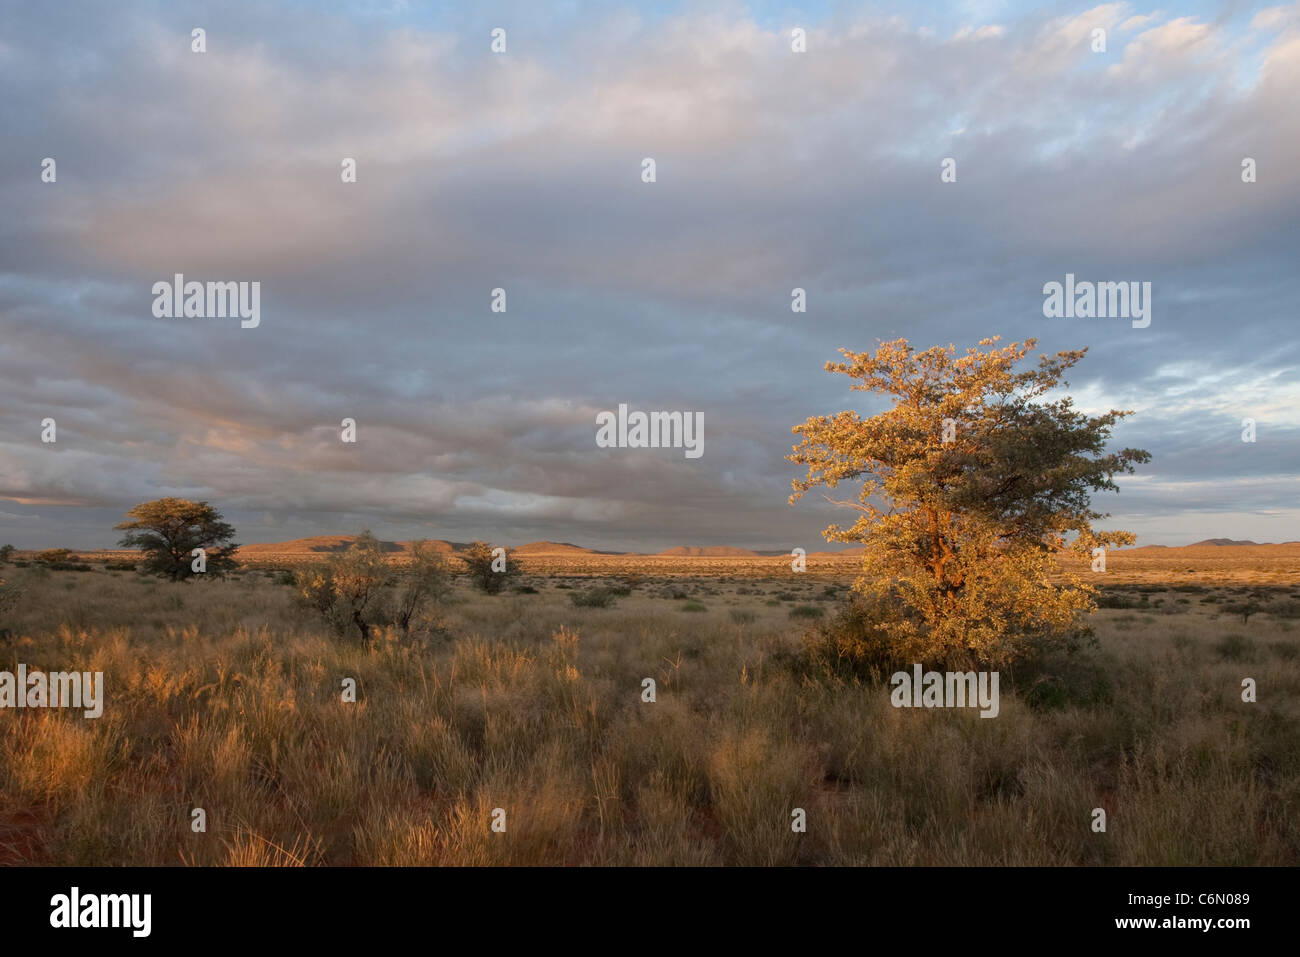 Kalahari landscape with lone tree Stock Photo